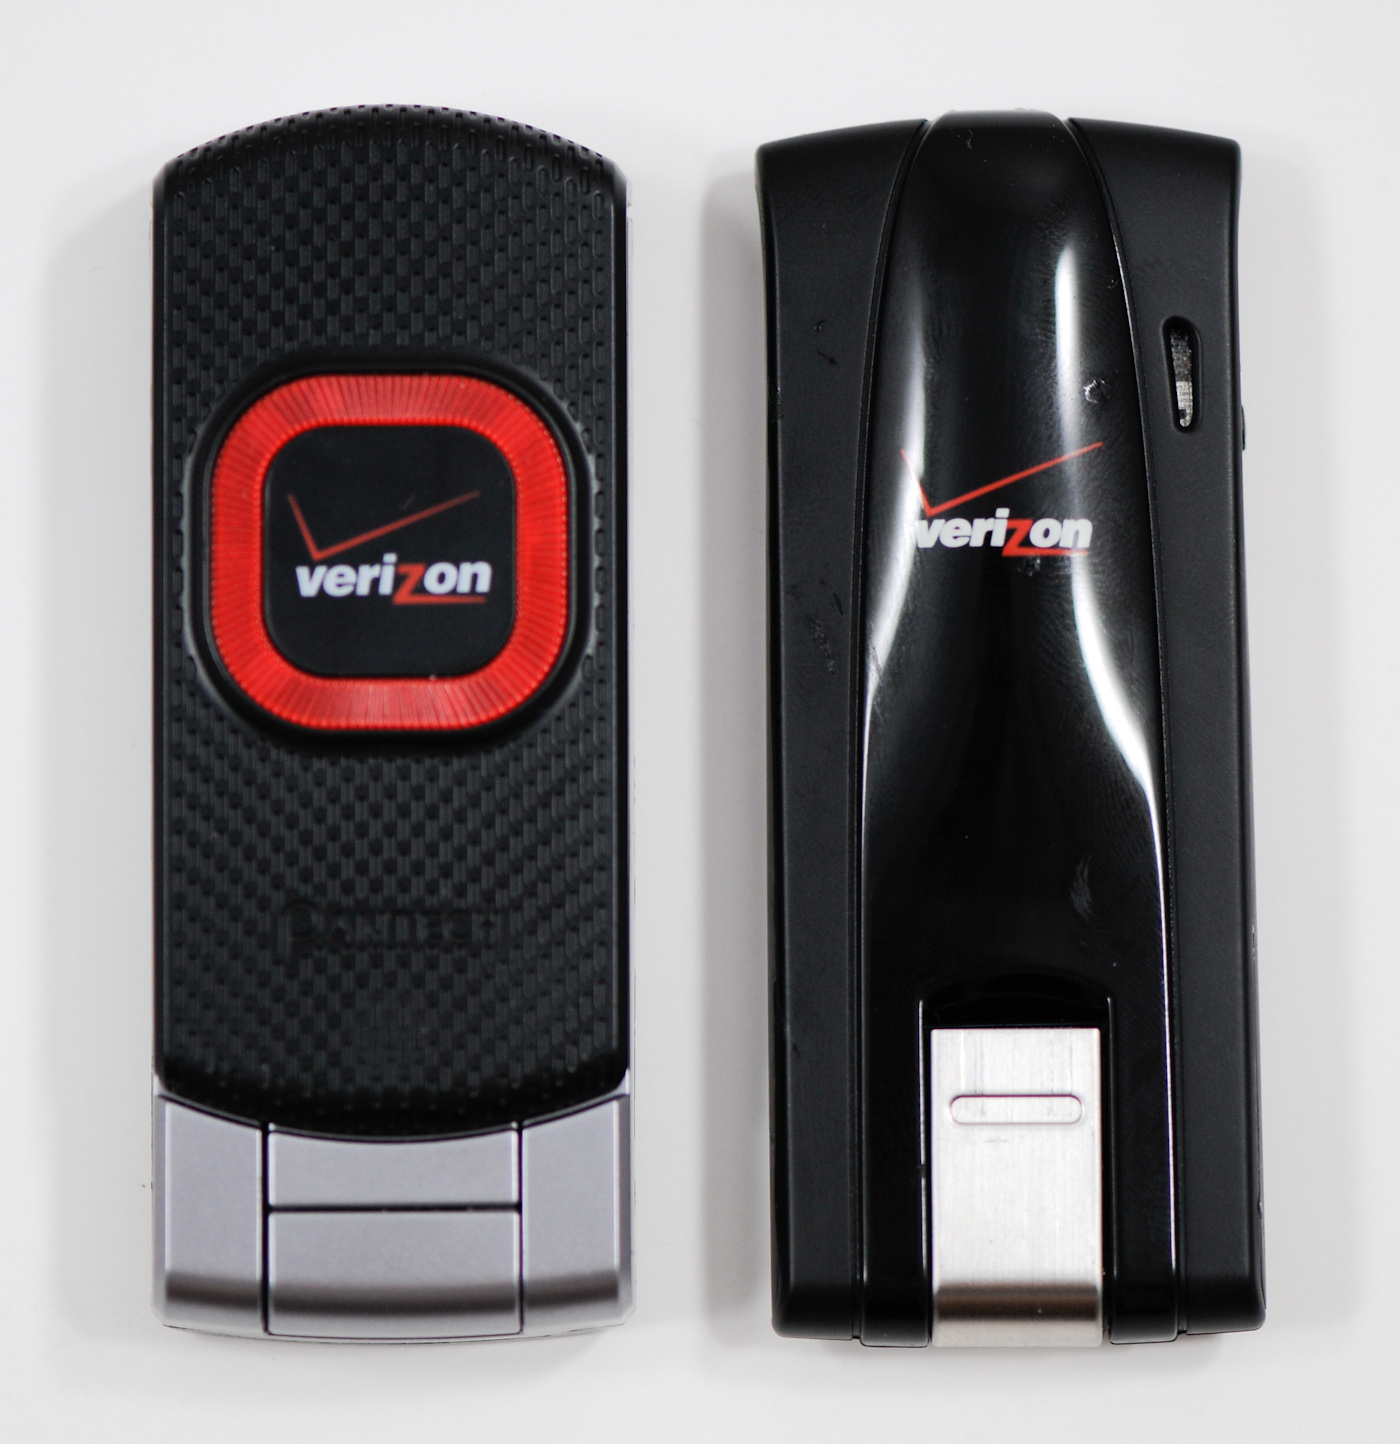 verizon wireless card driver download